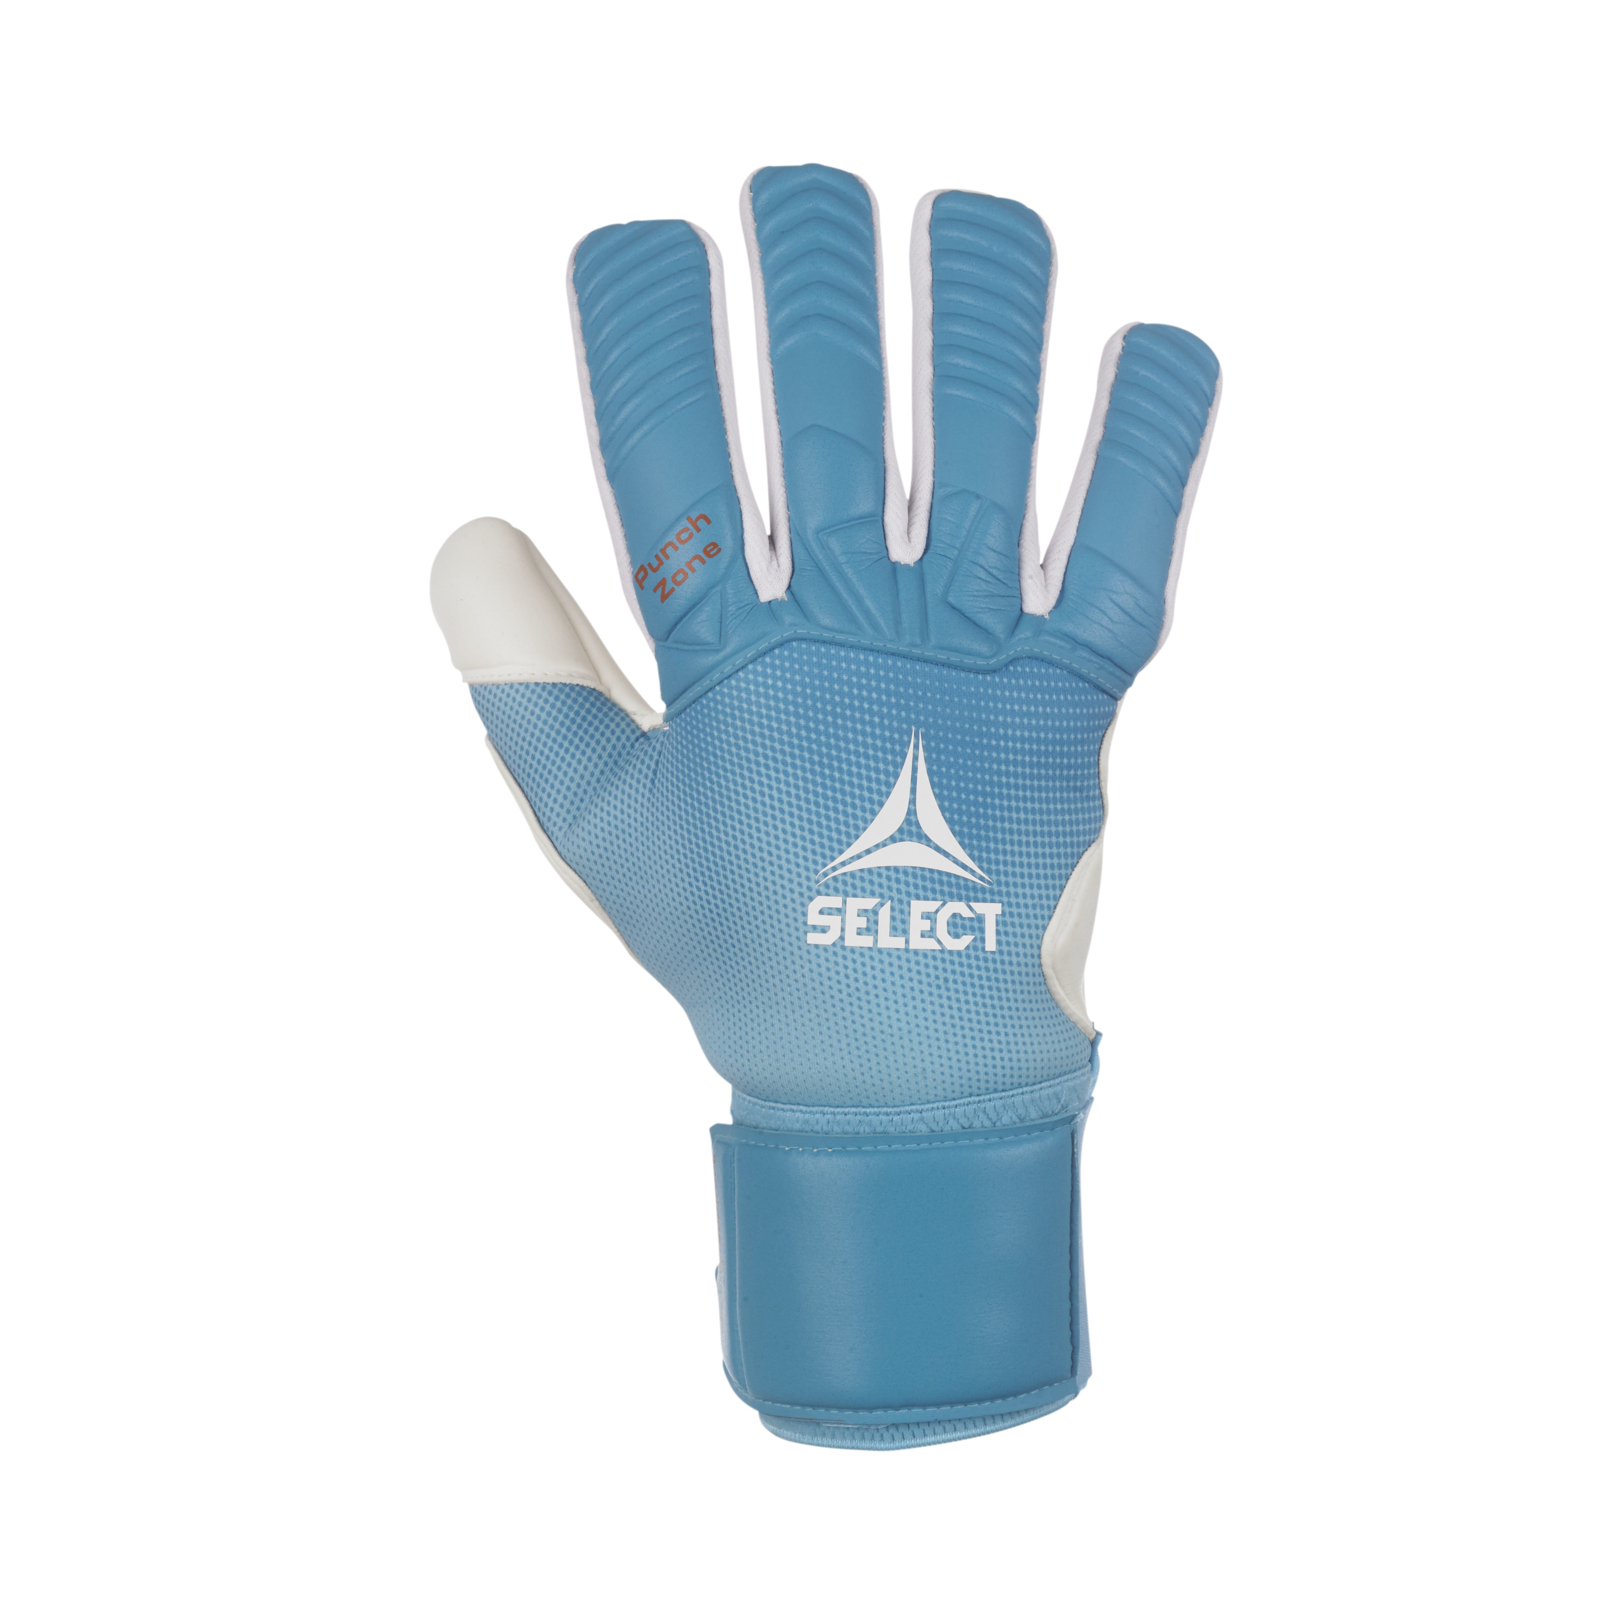 Вратарские перчатки Select Goalkeeper Gloves 33 601331-410 Allround синій, білий Уні 11 (5703543316441) изображение 3